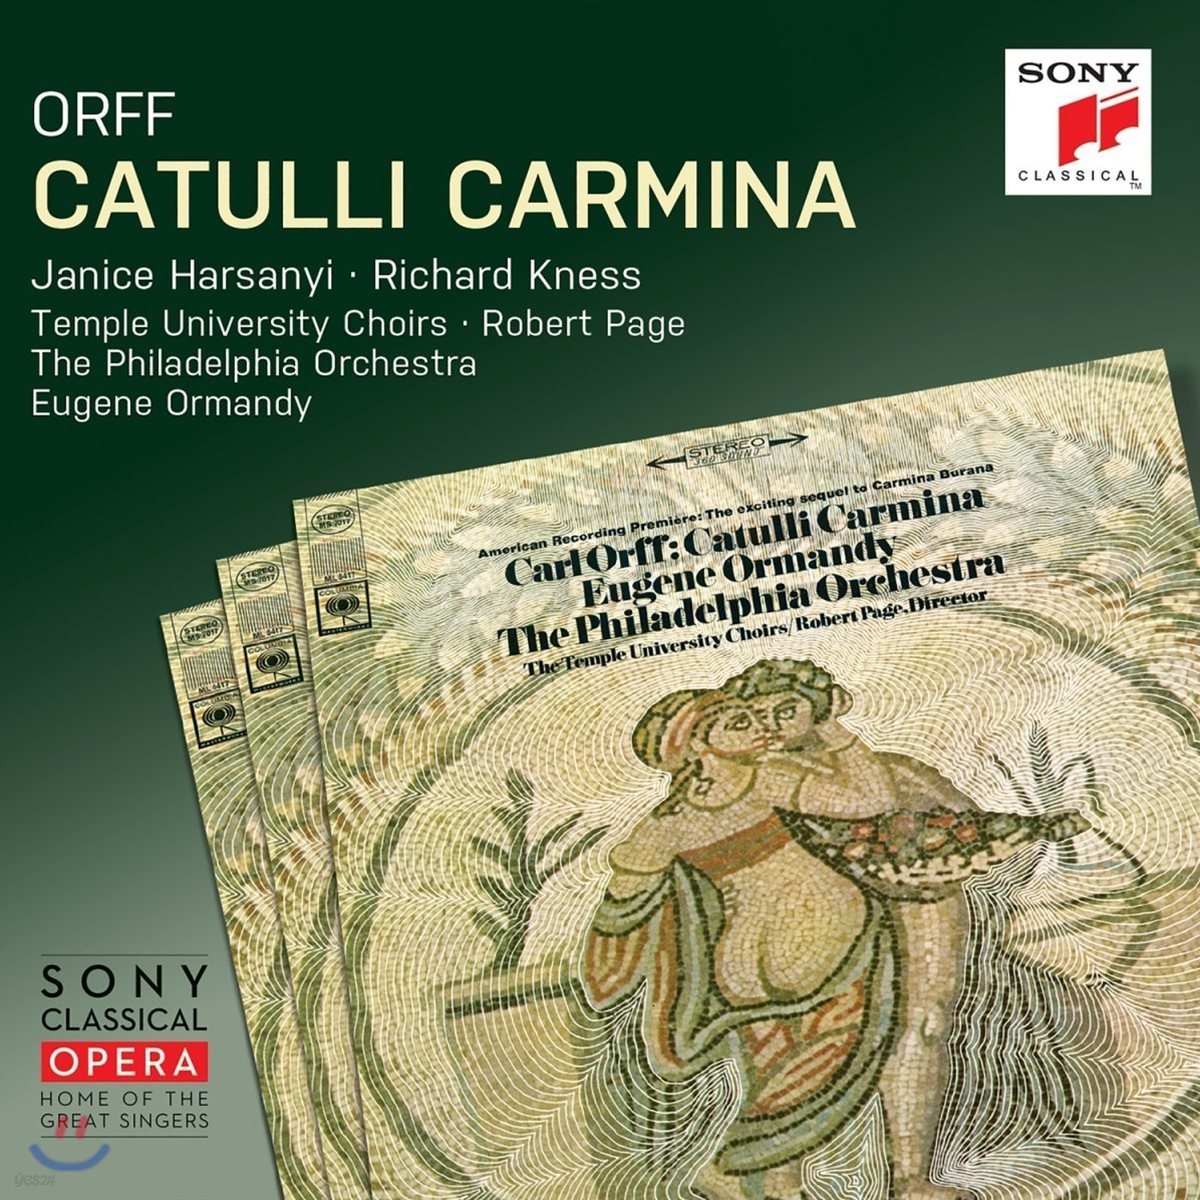 Eugene Ormandy 카를 오르프: 카툴루스의 노래 [카툴리 카르미나] - 재니스 하사니, 리차드 네스, 유진 오먼디 (Carl Orff: Catulli Carmina)